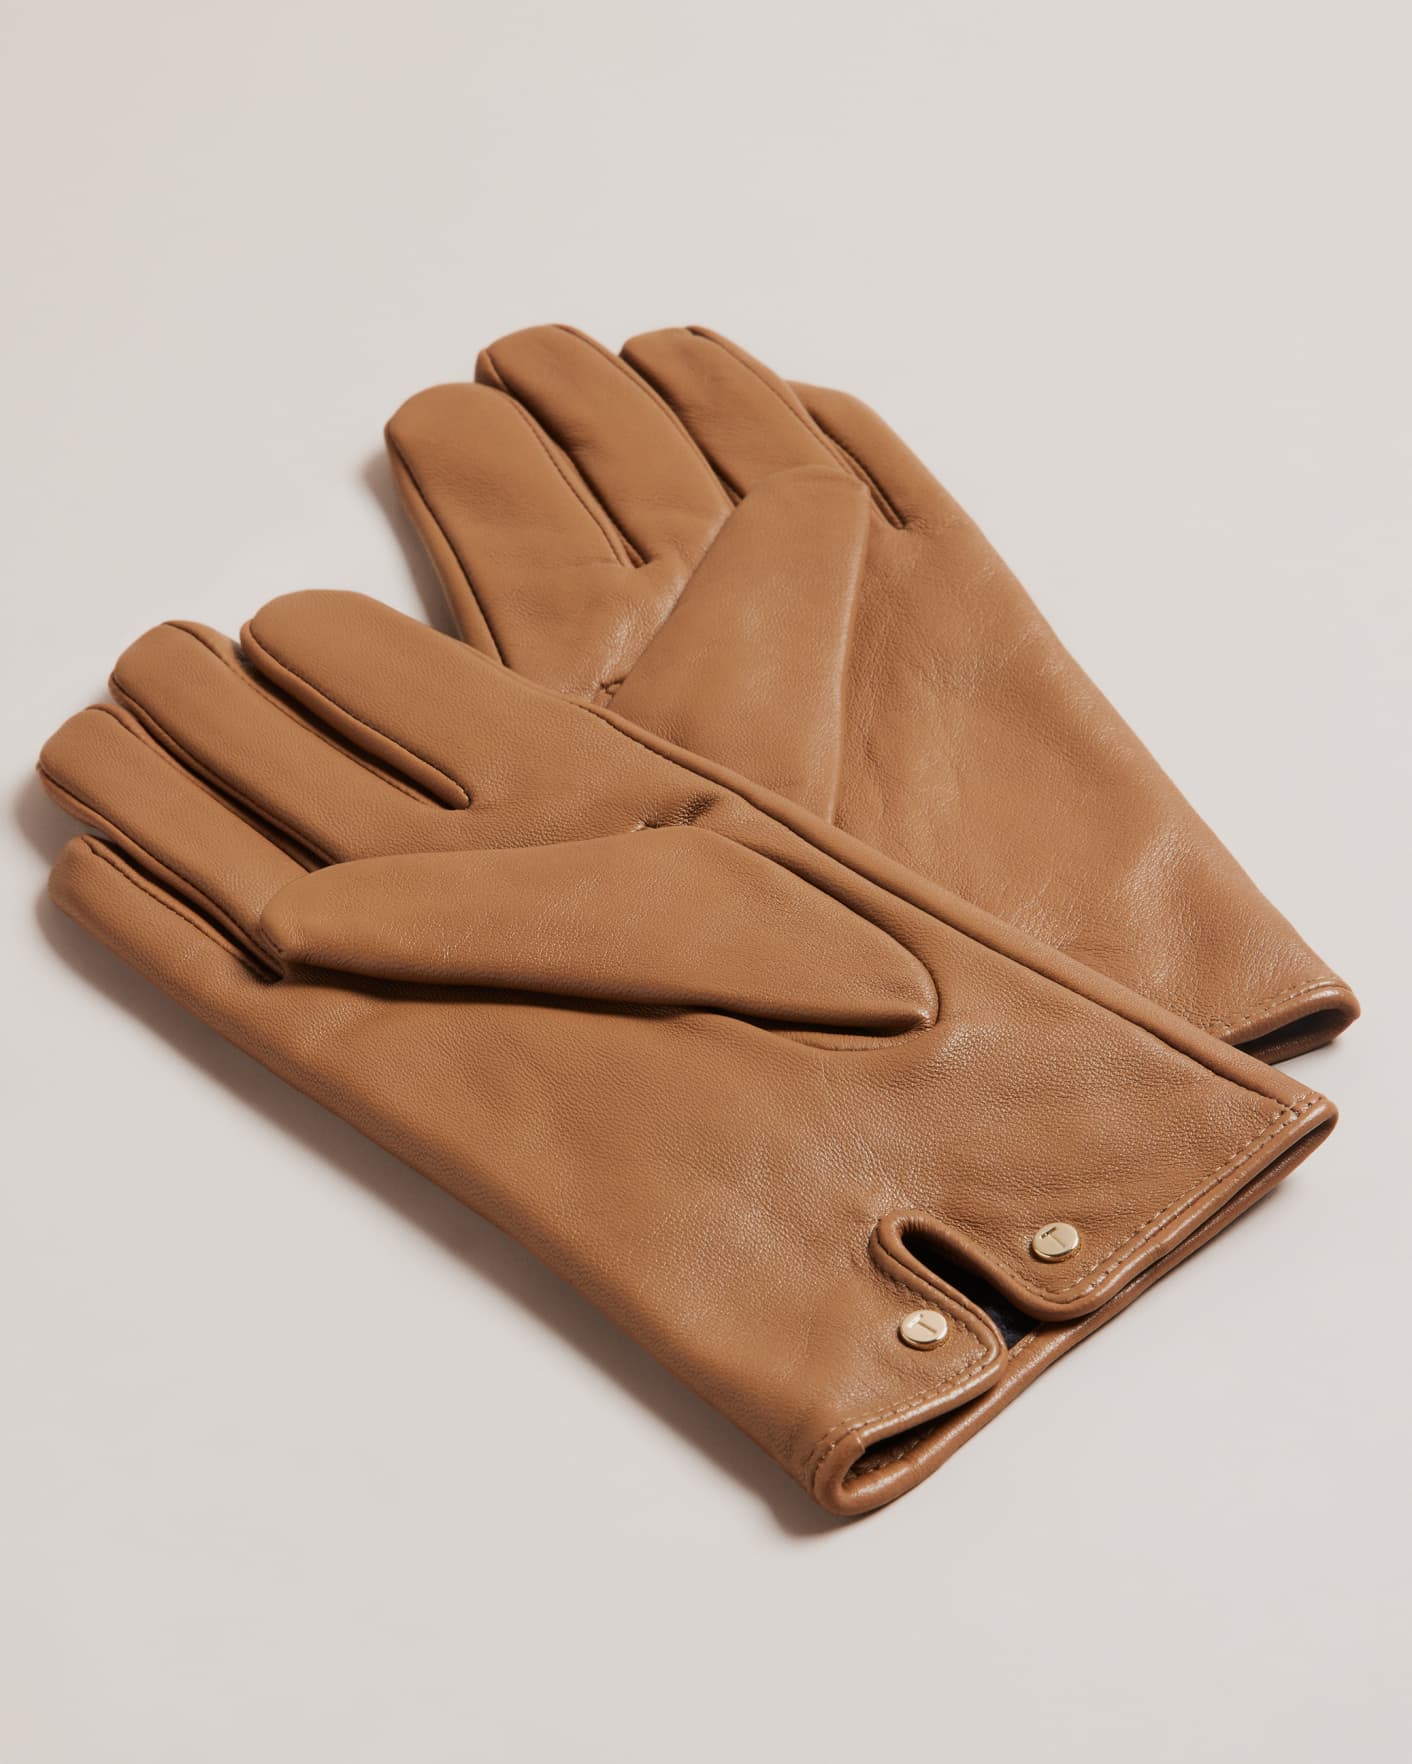 Artivino Brown Driving Gloves - 8.5